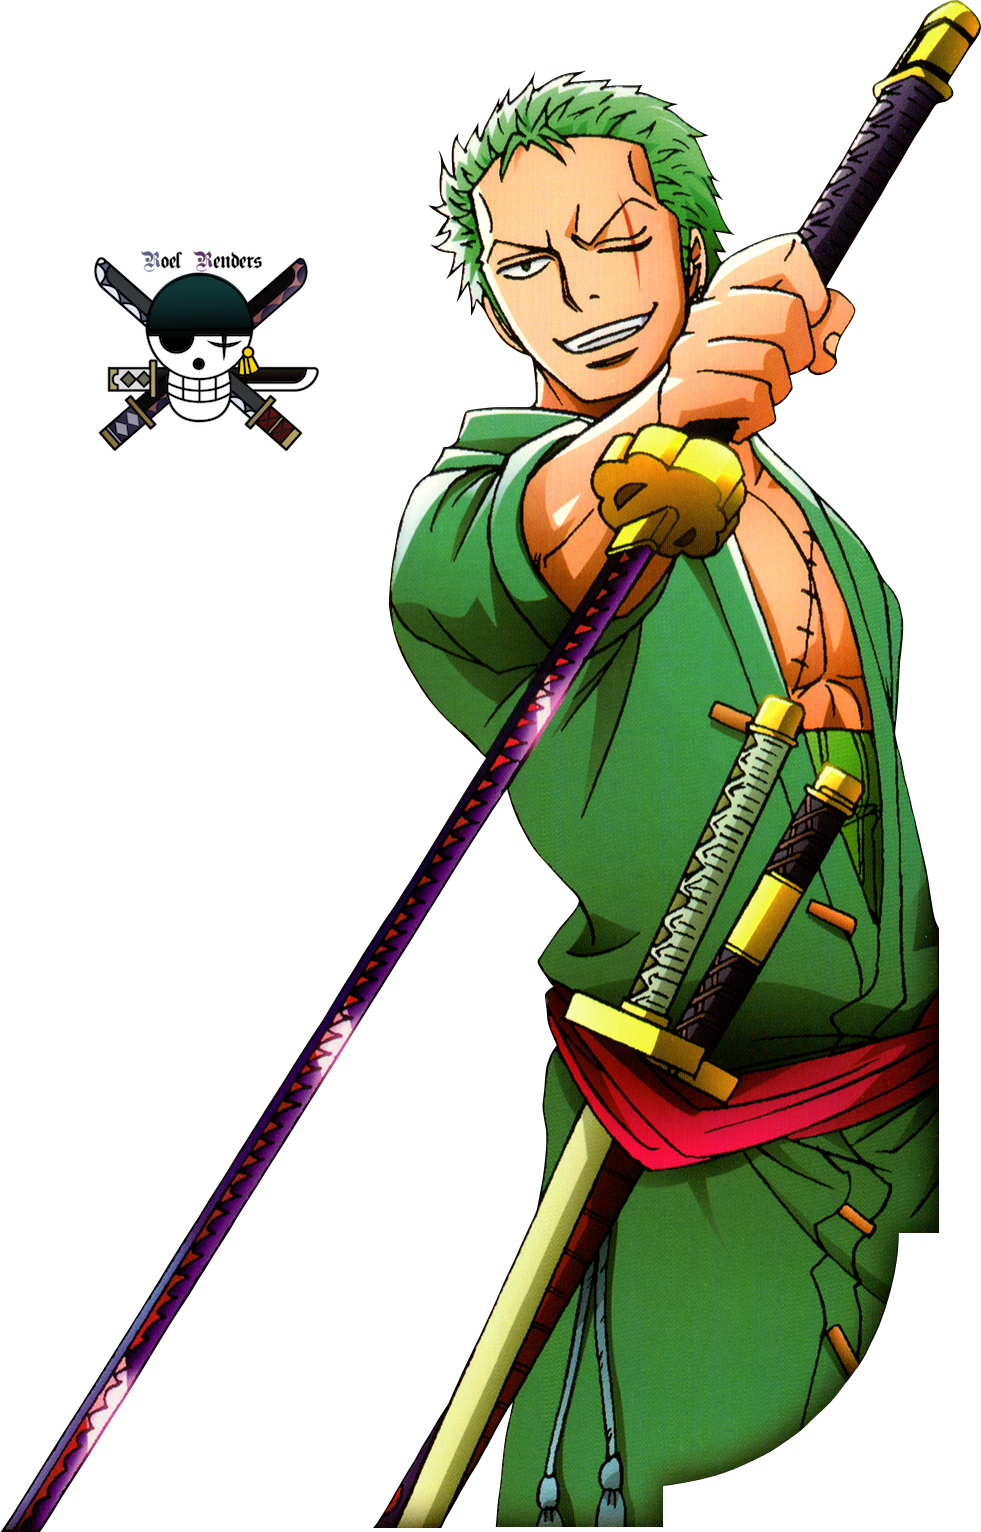 Roronoa Zoro Render, One Piece Roronoa Zoro character, png